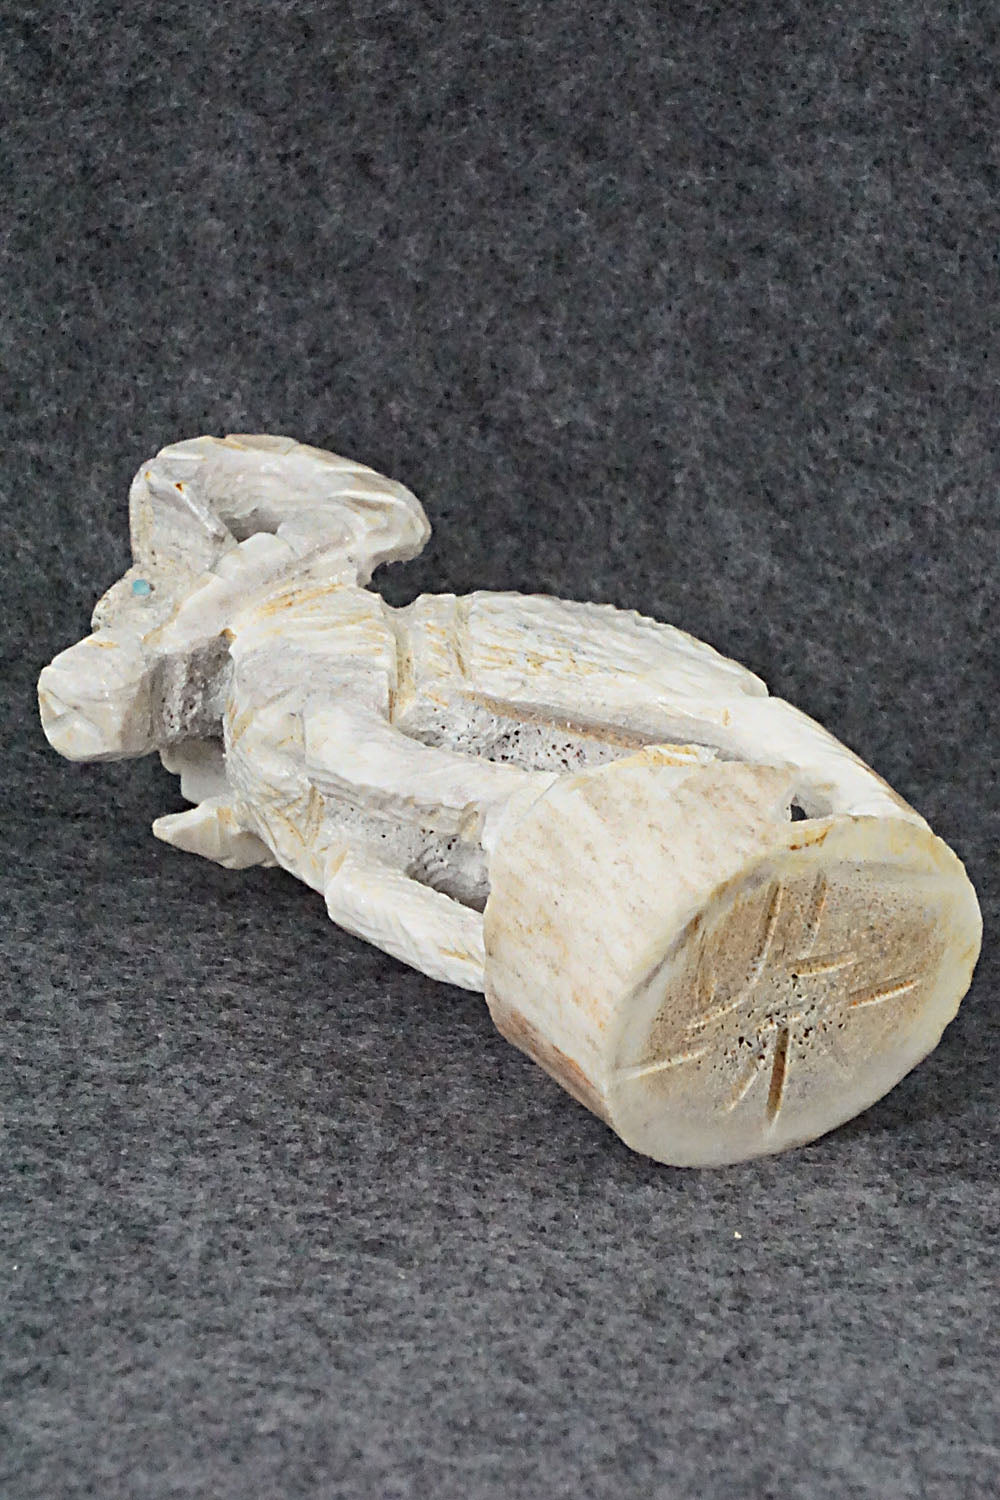 Big Horn Sheep Zuni Fetish Carving - Jerrold Lahaleon